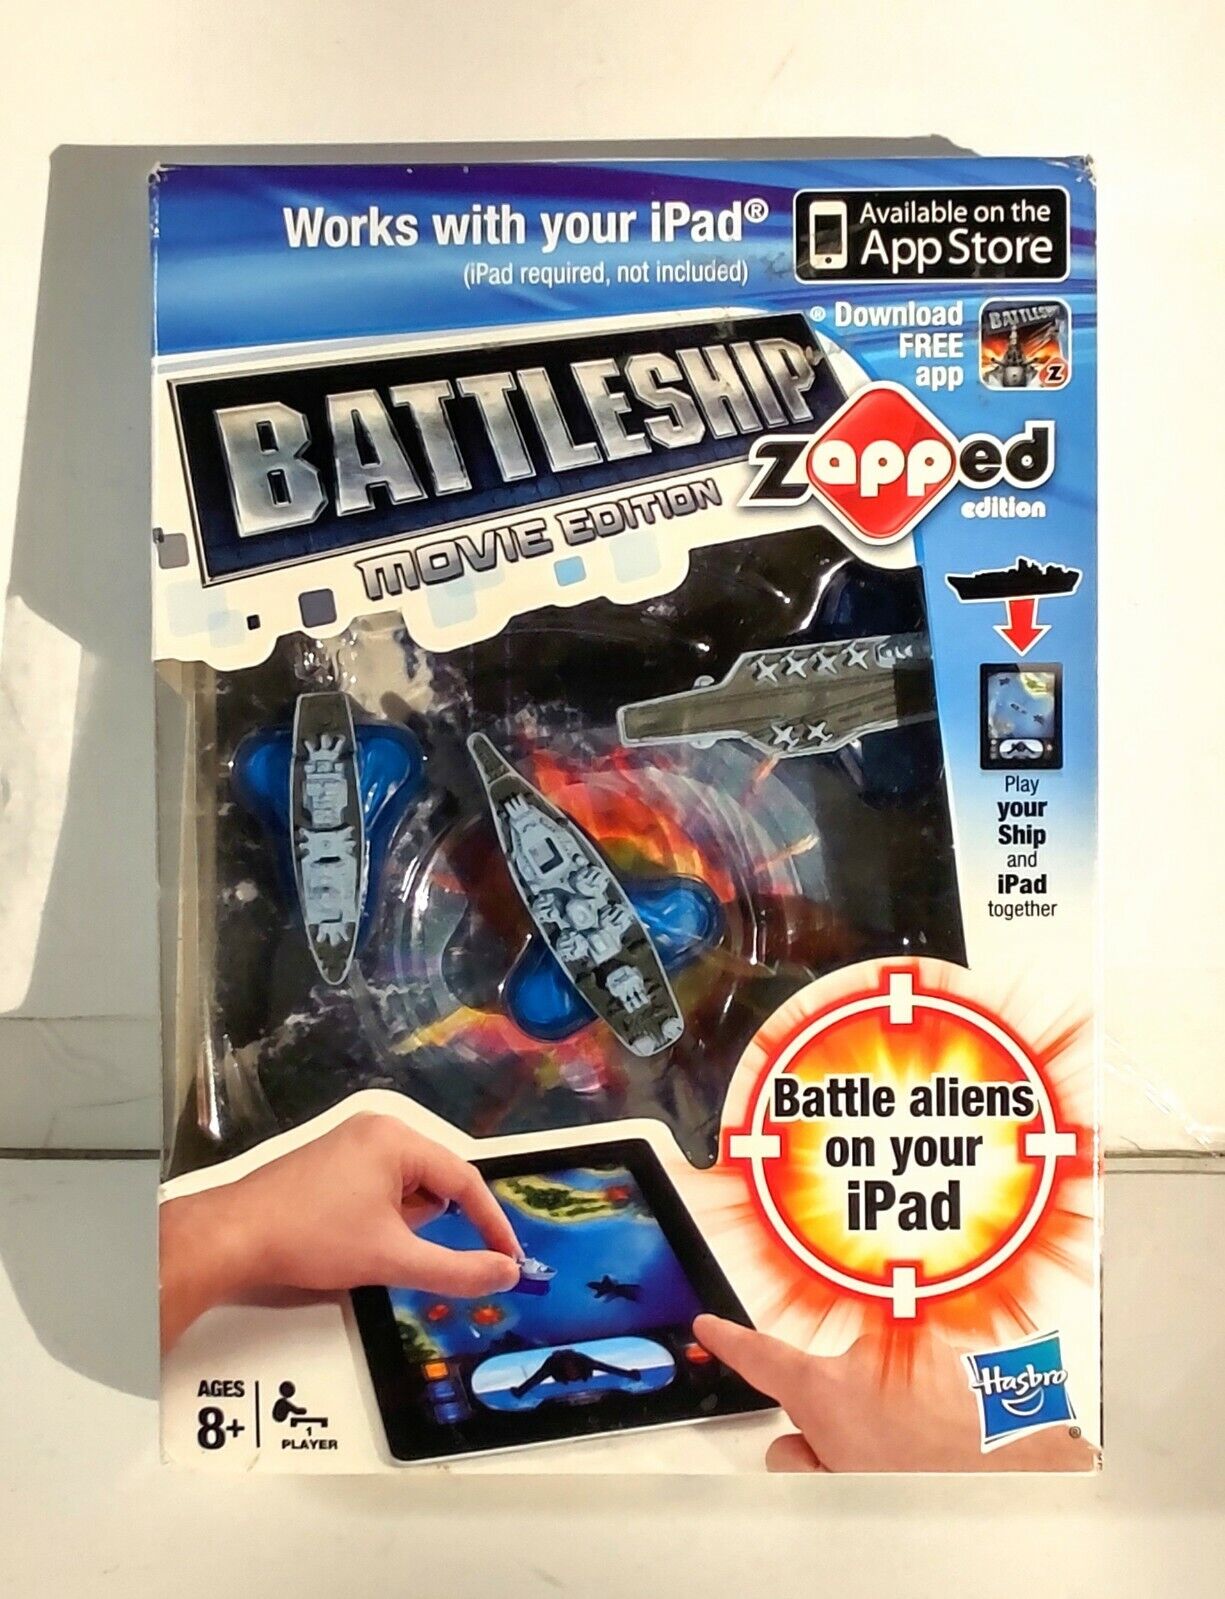 Battleship Zapped Movie Edition Interactive iPad Game By Hasbro